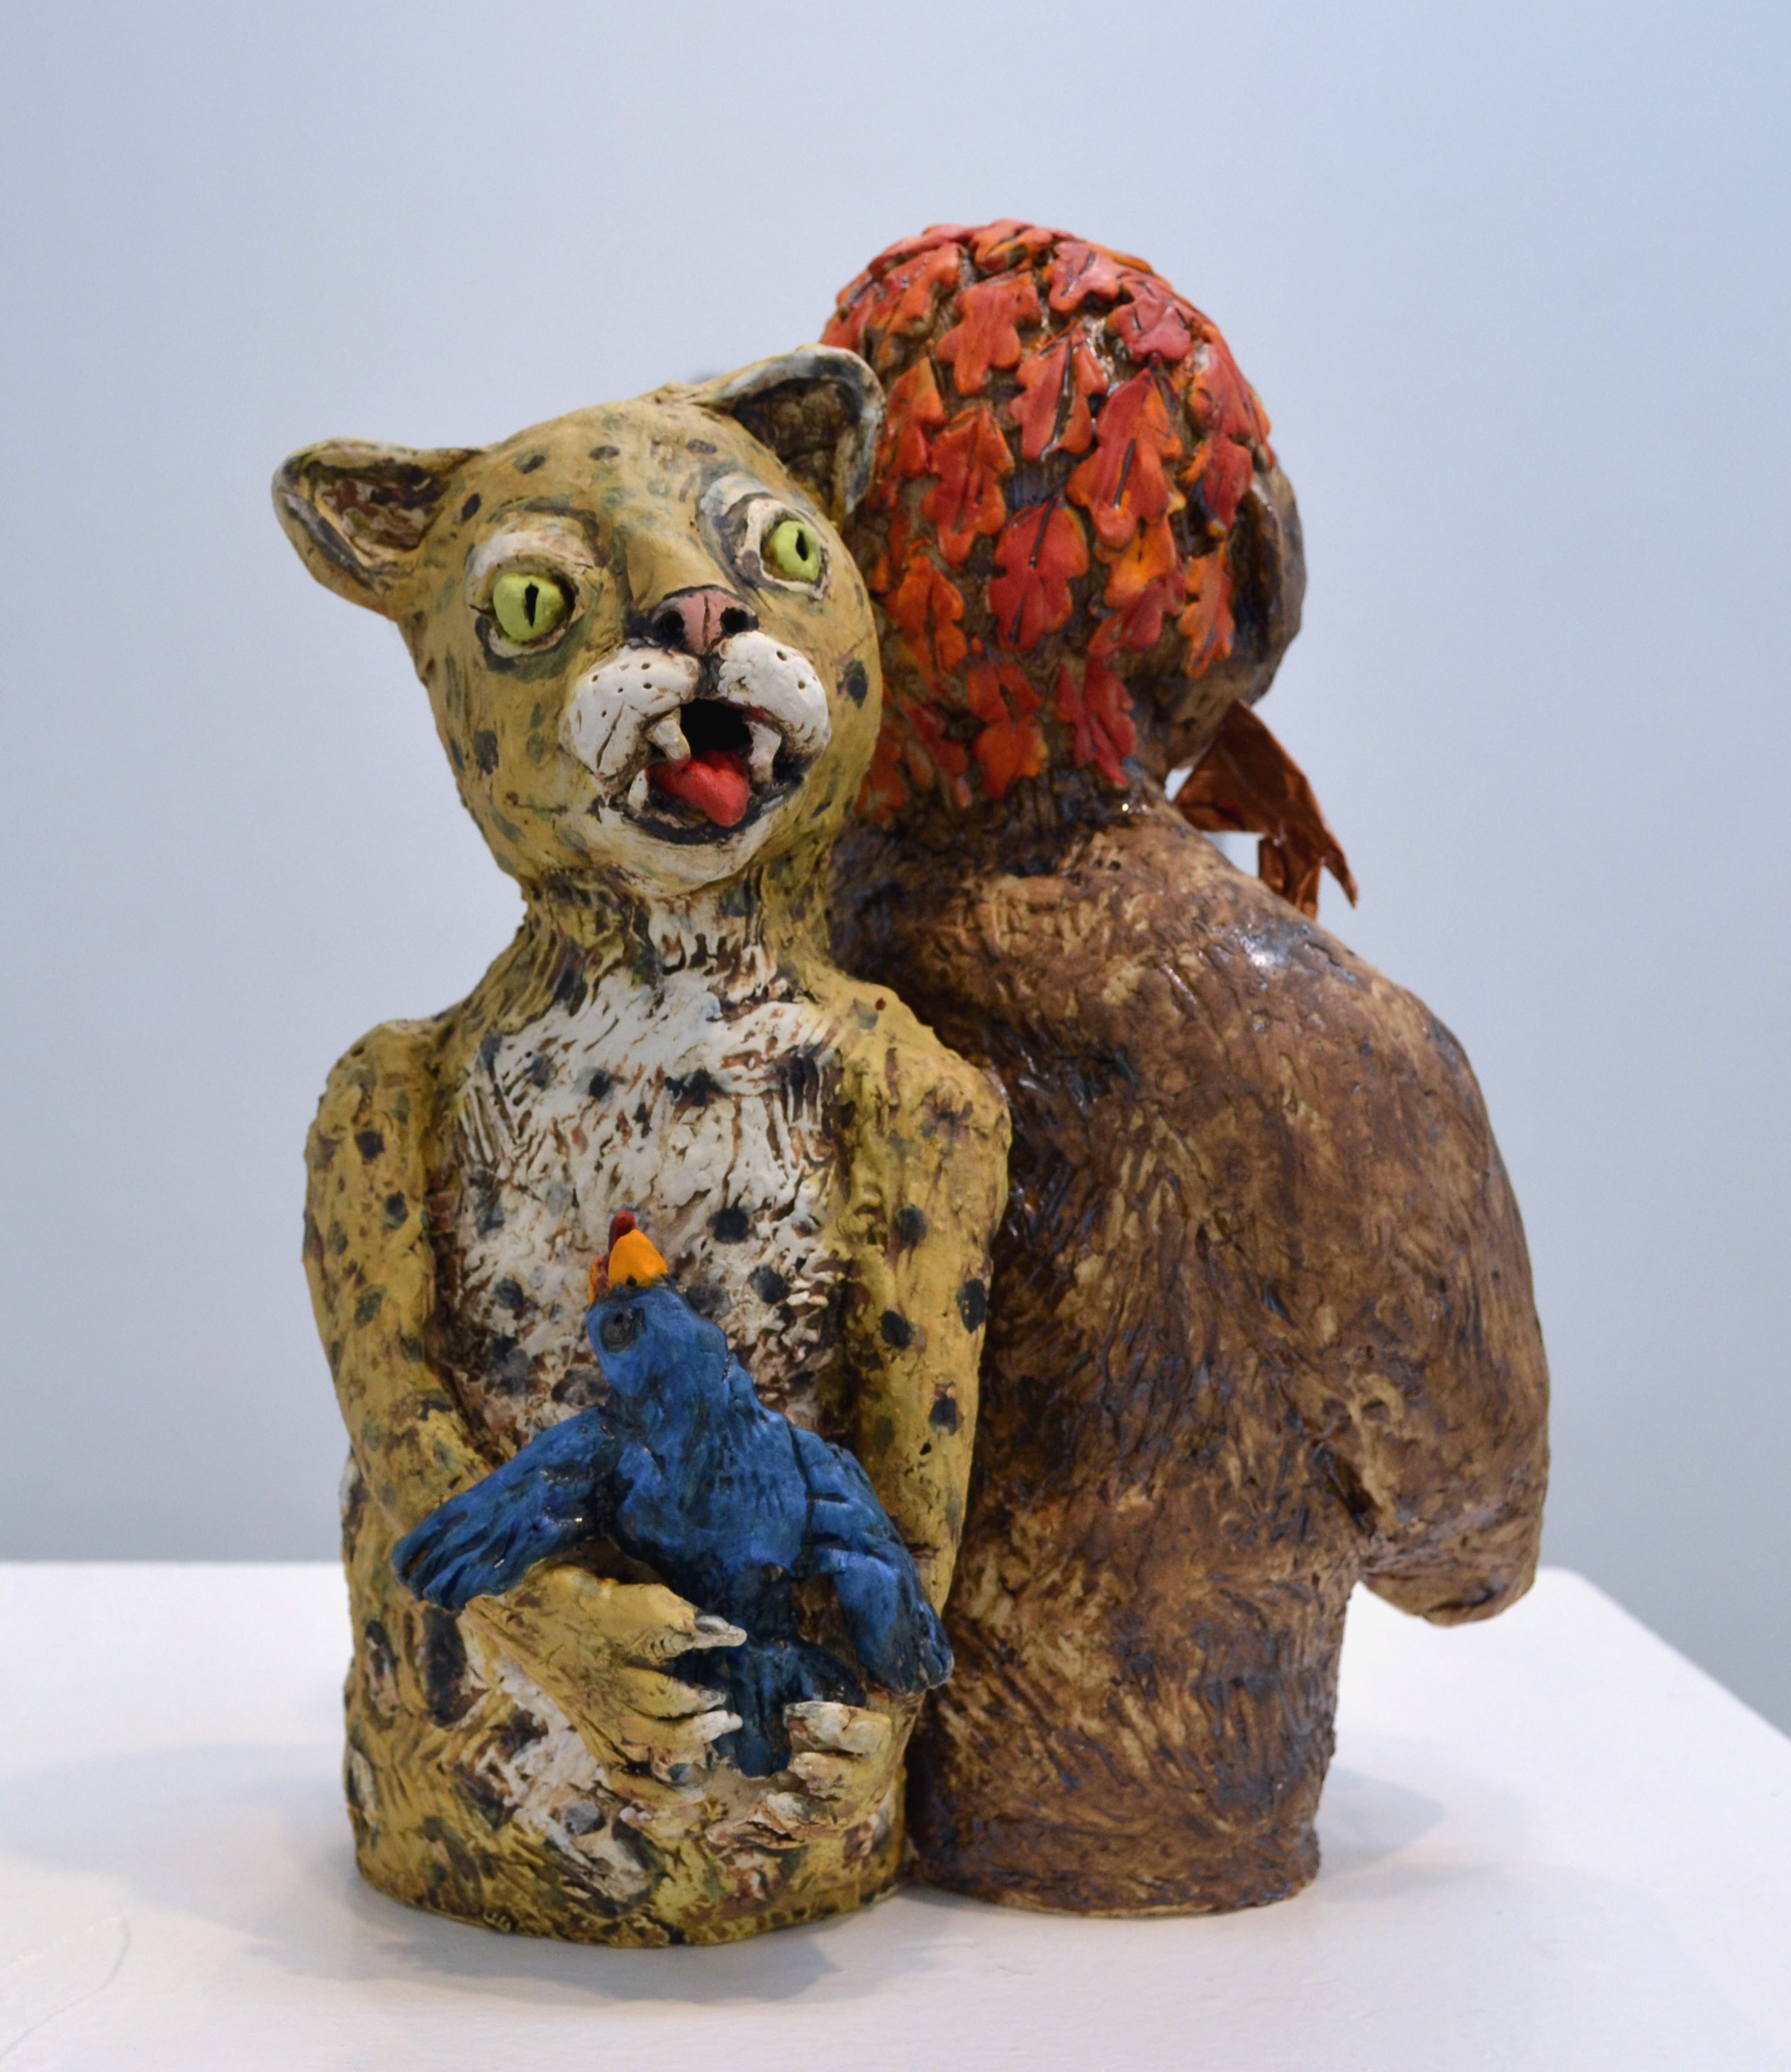 Ceramic man and leopard figures back-to-back